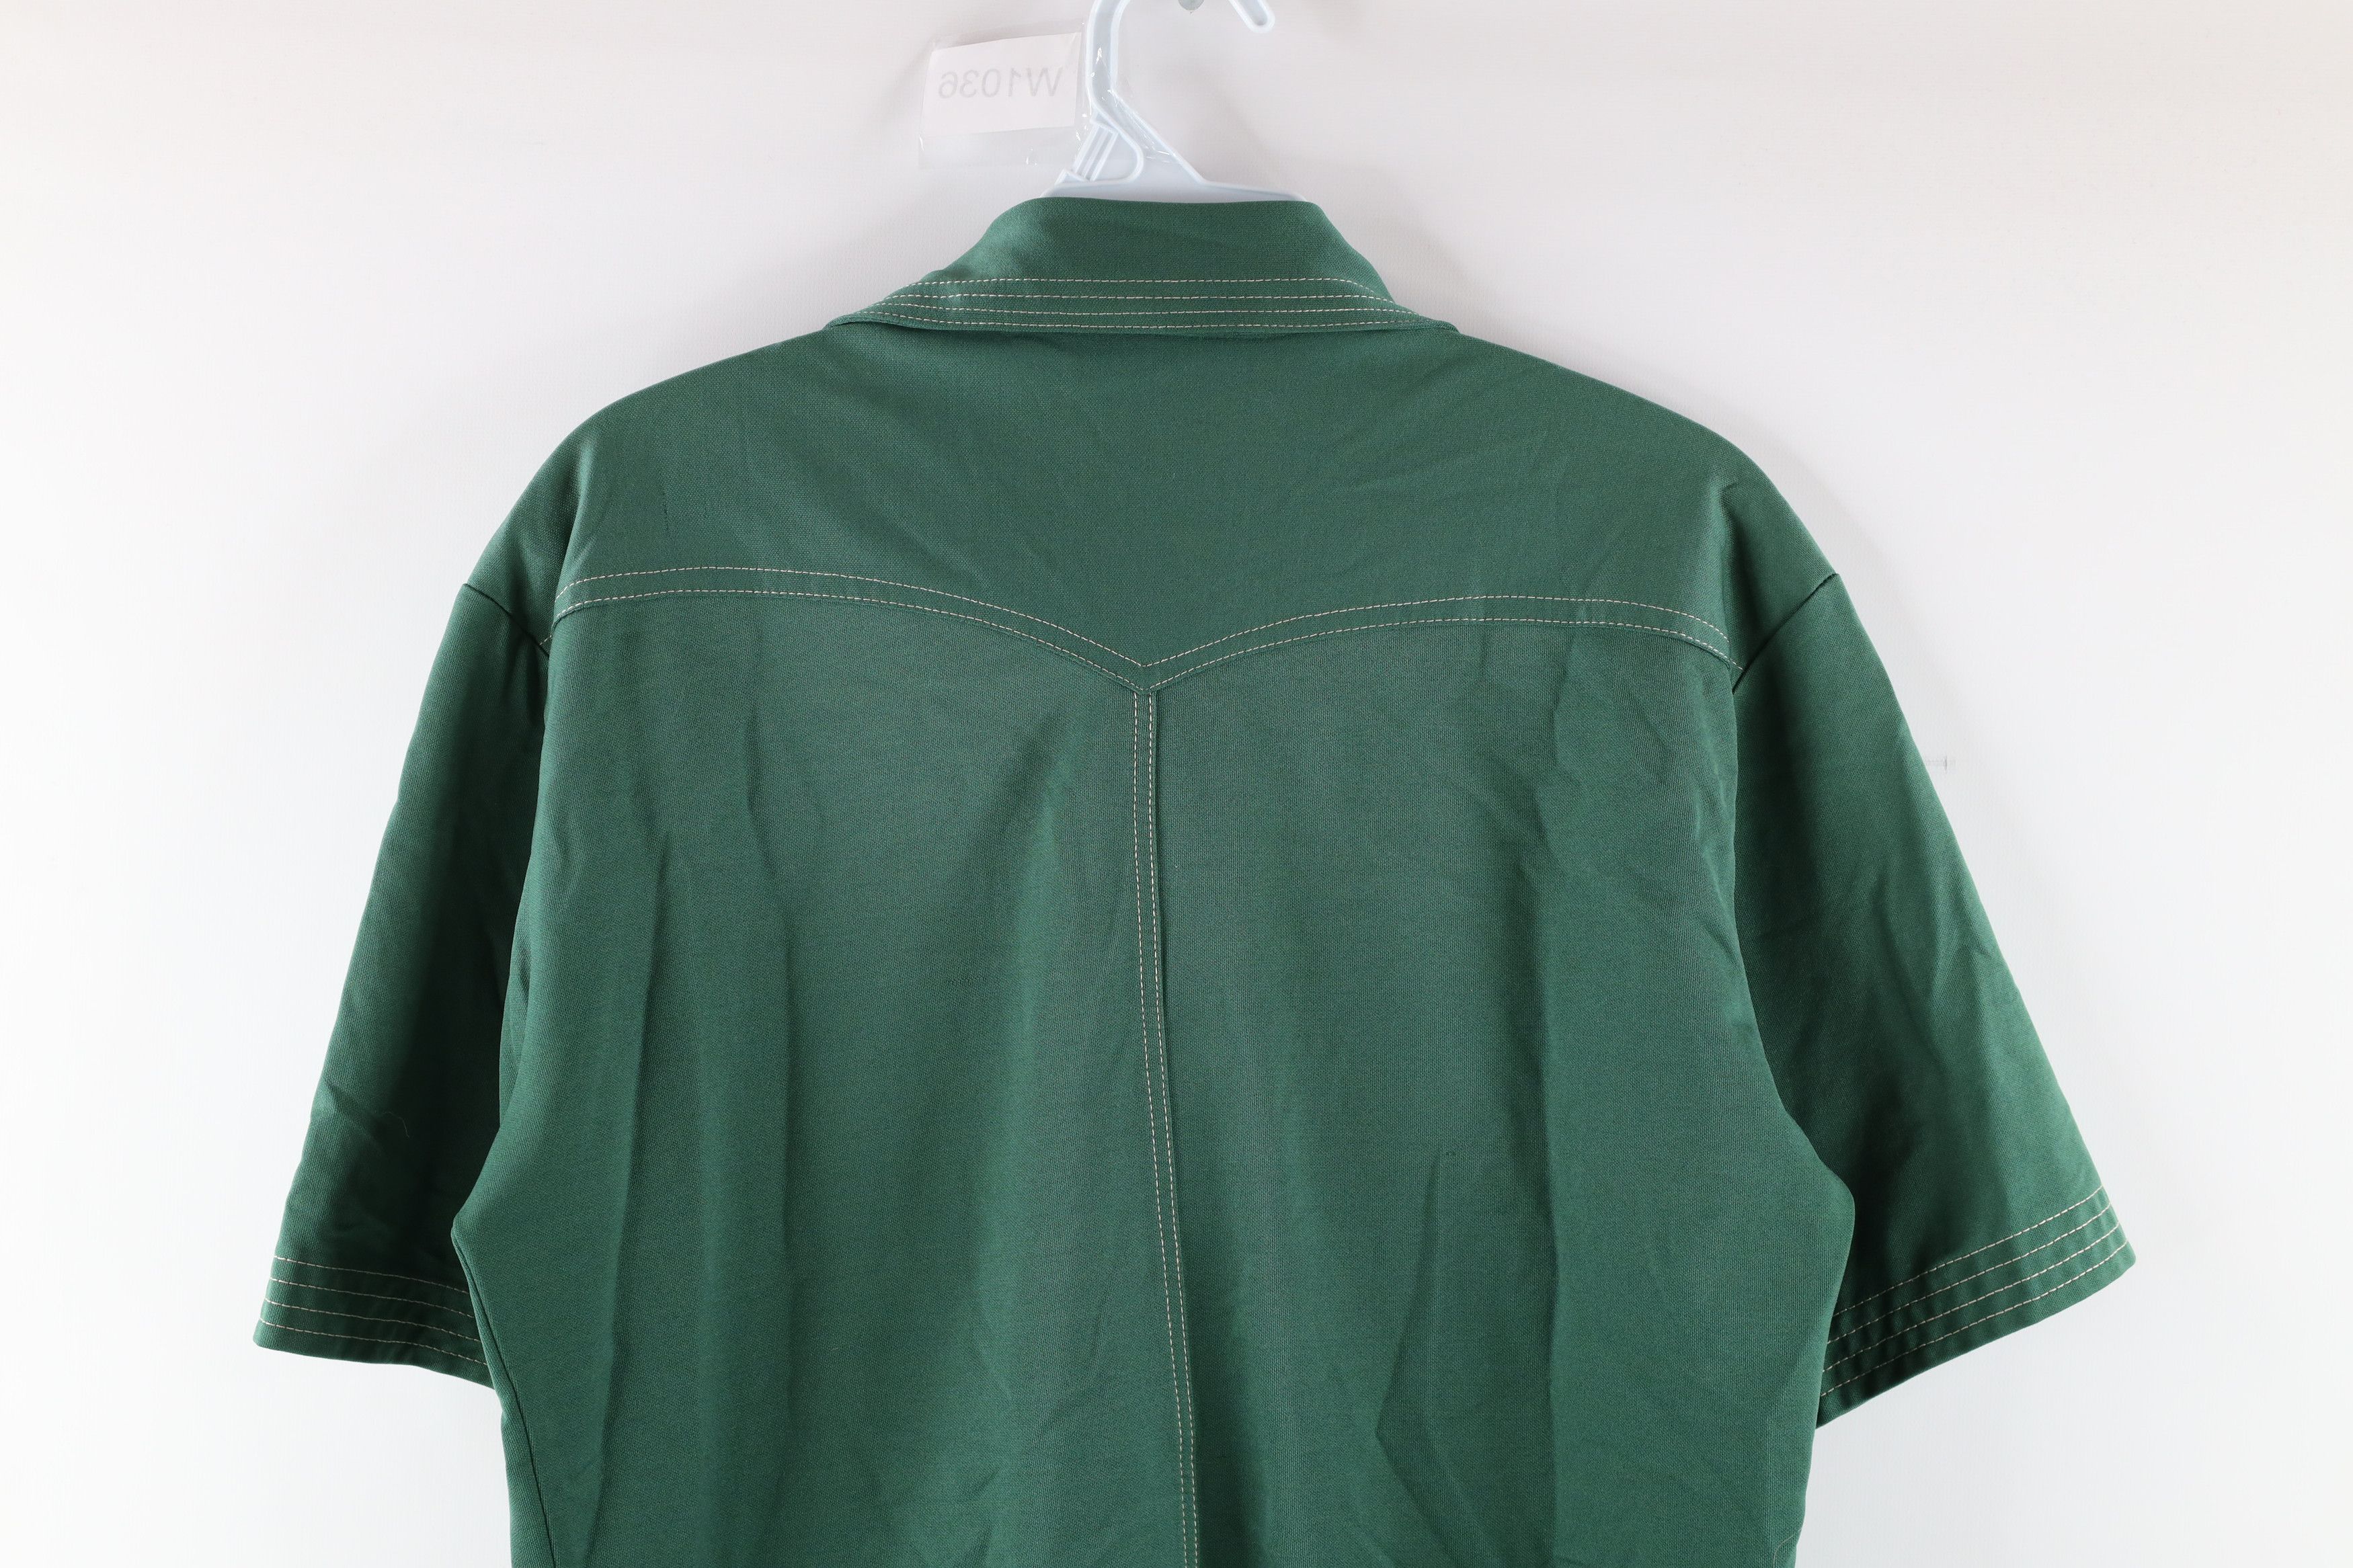 Vintage Vintage 60s Rockabilly Knit Collared Button Shirt Green Size US M / EU 48-50 / 2 - 6 Thumbnail